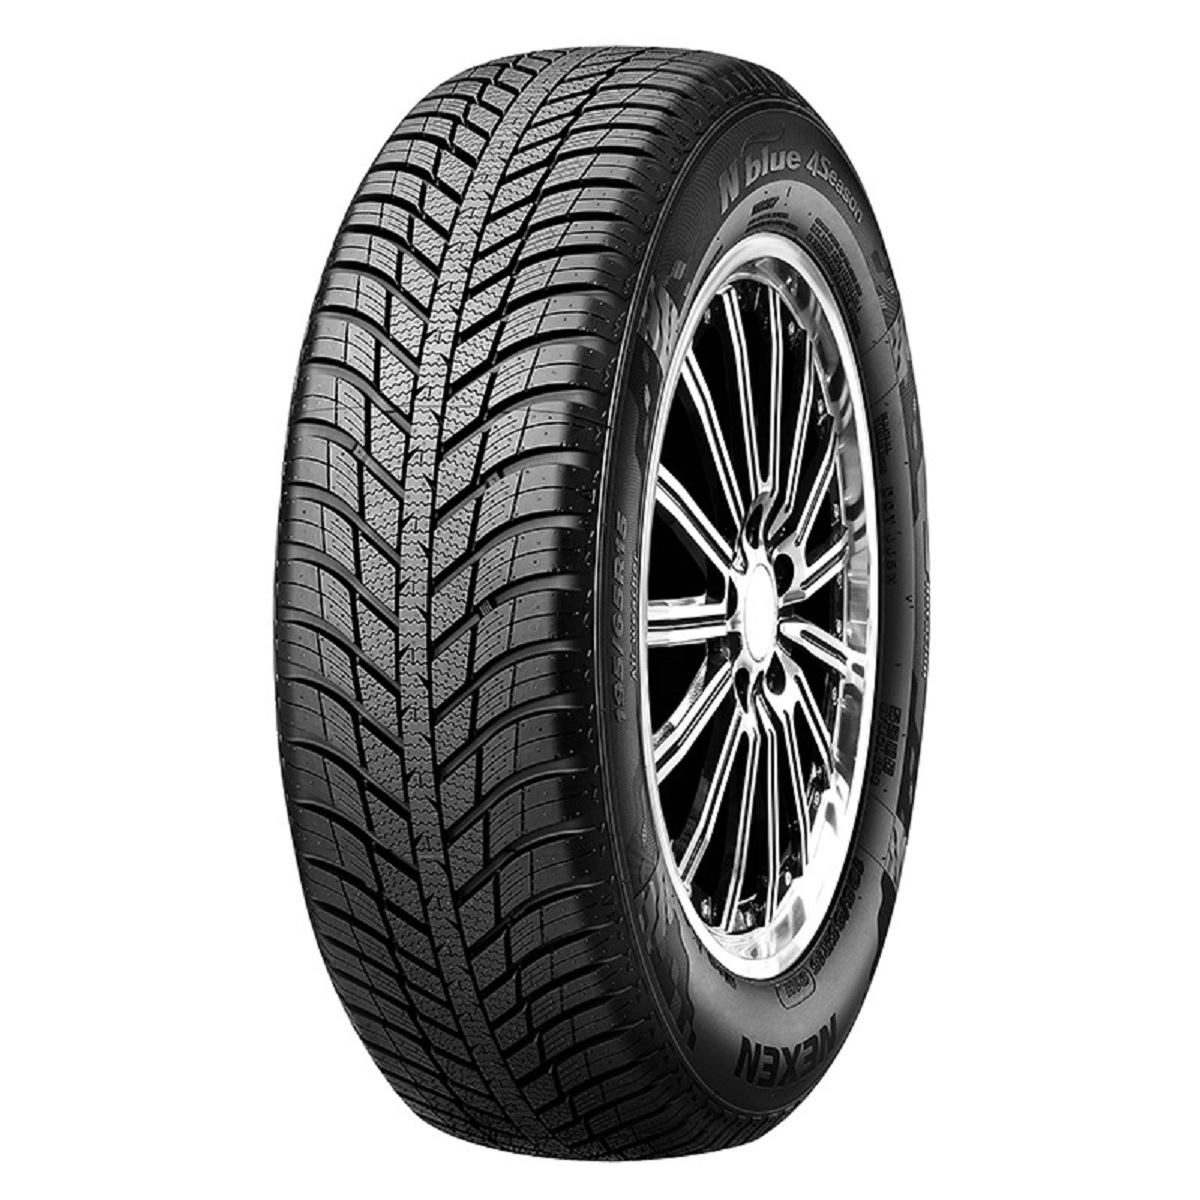 n-blue-4s-tire